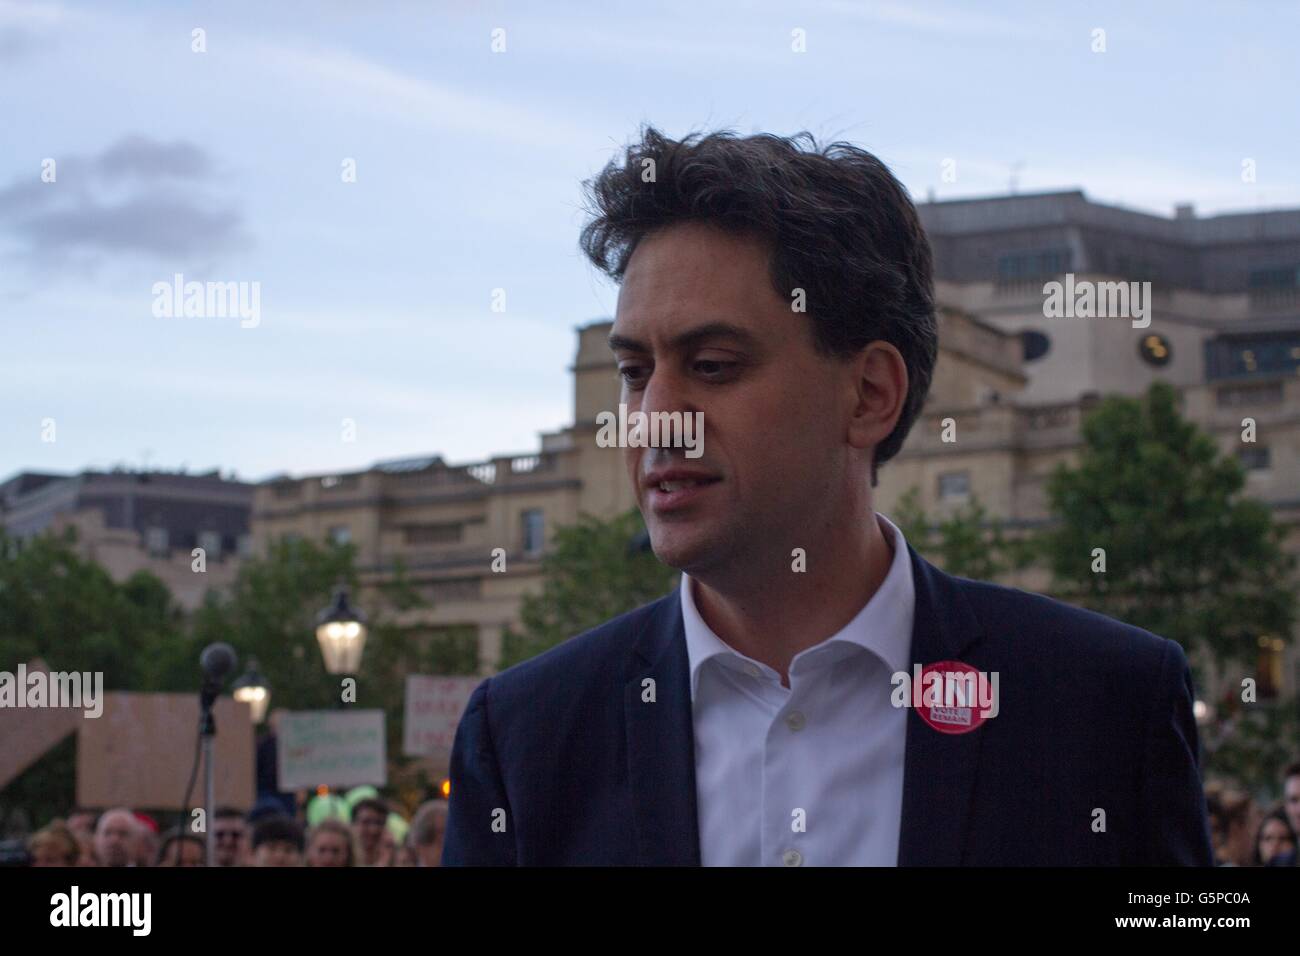 London, UK. 21st June, 2016. Labour Ed Miliband attends Yes to Europe Rally in Trafalgar Square in London ahead of the UK referendum on Thursday June 23. Credit:  Rita Alvarez Tudela/Alamy Live News Stock Photo